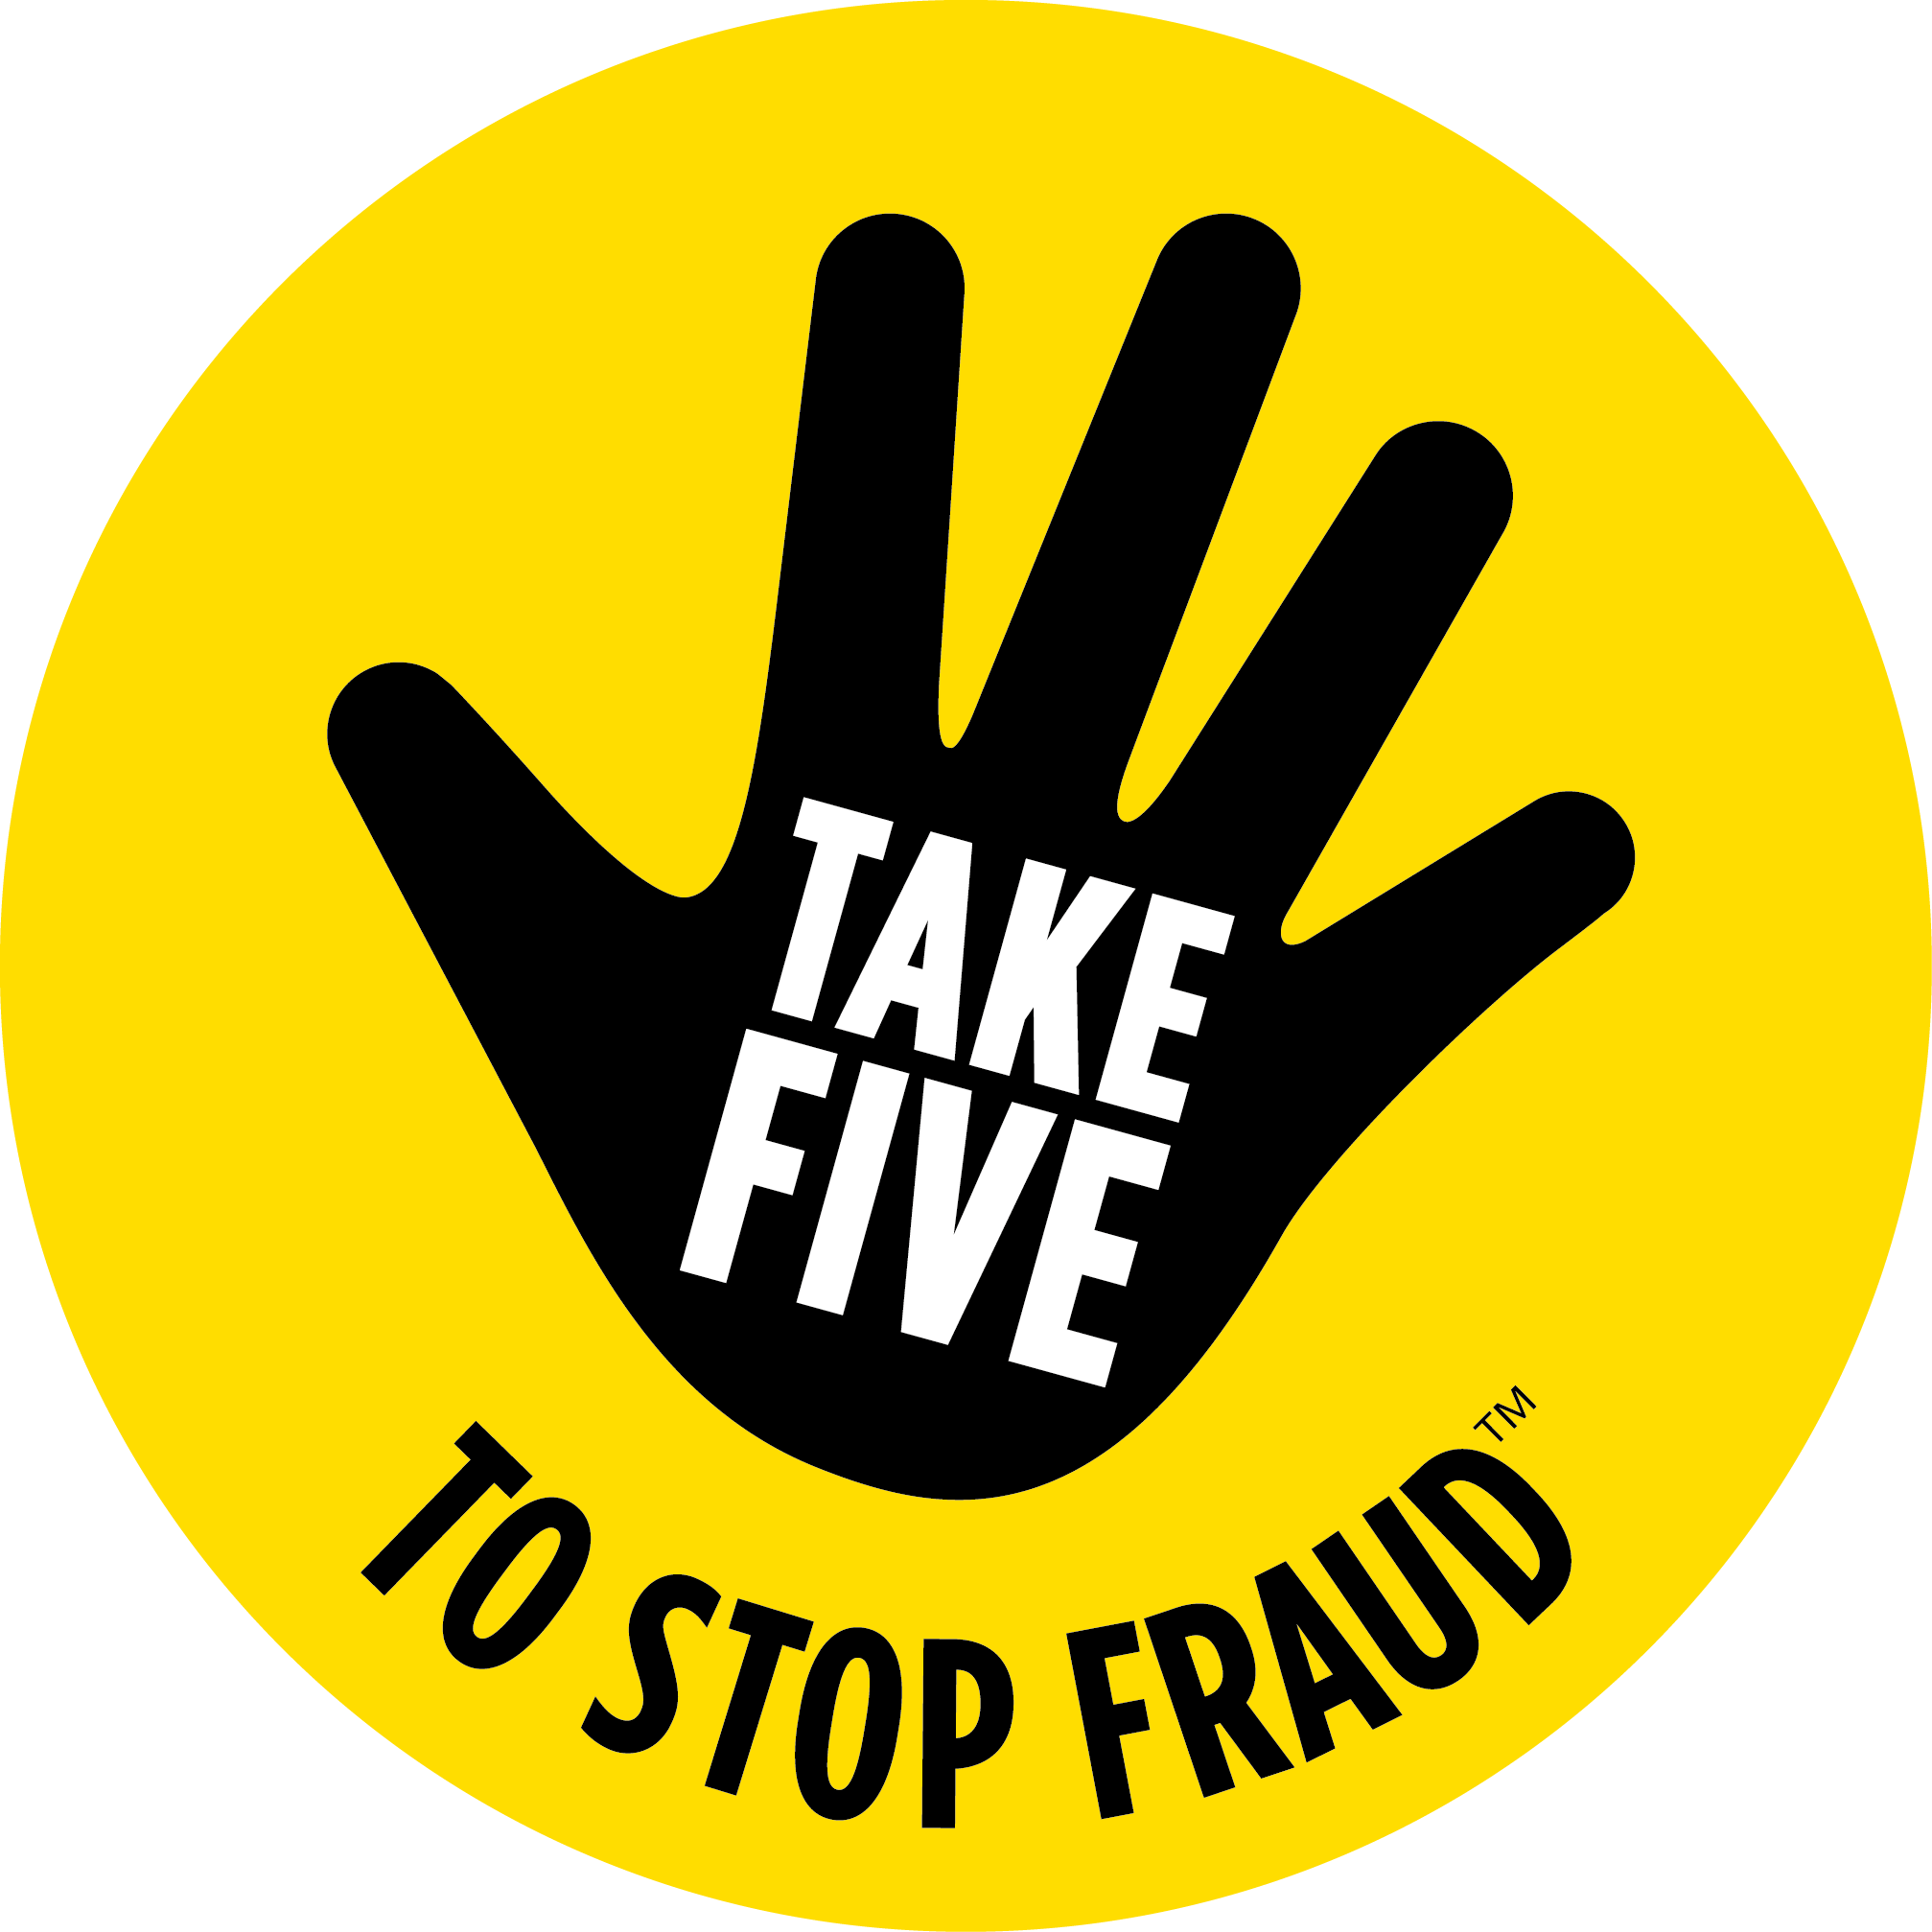 Take five stop fraud logo